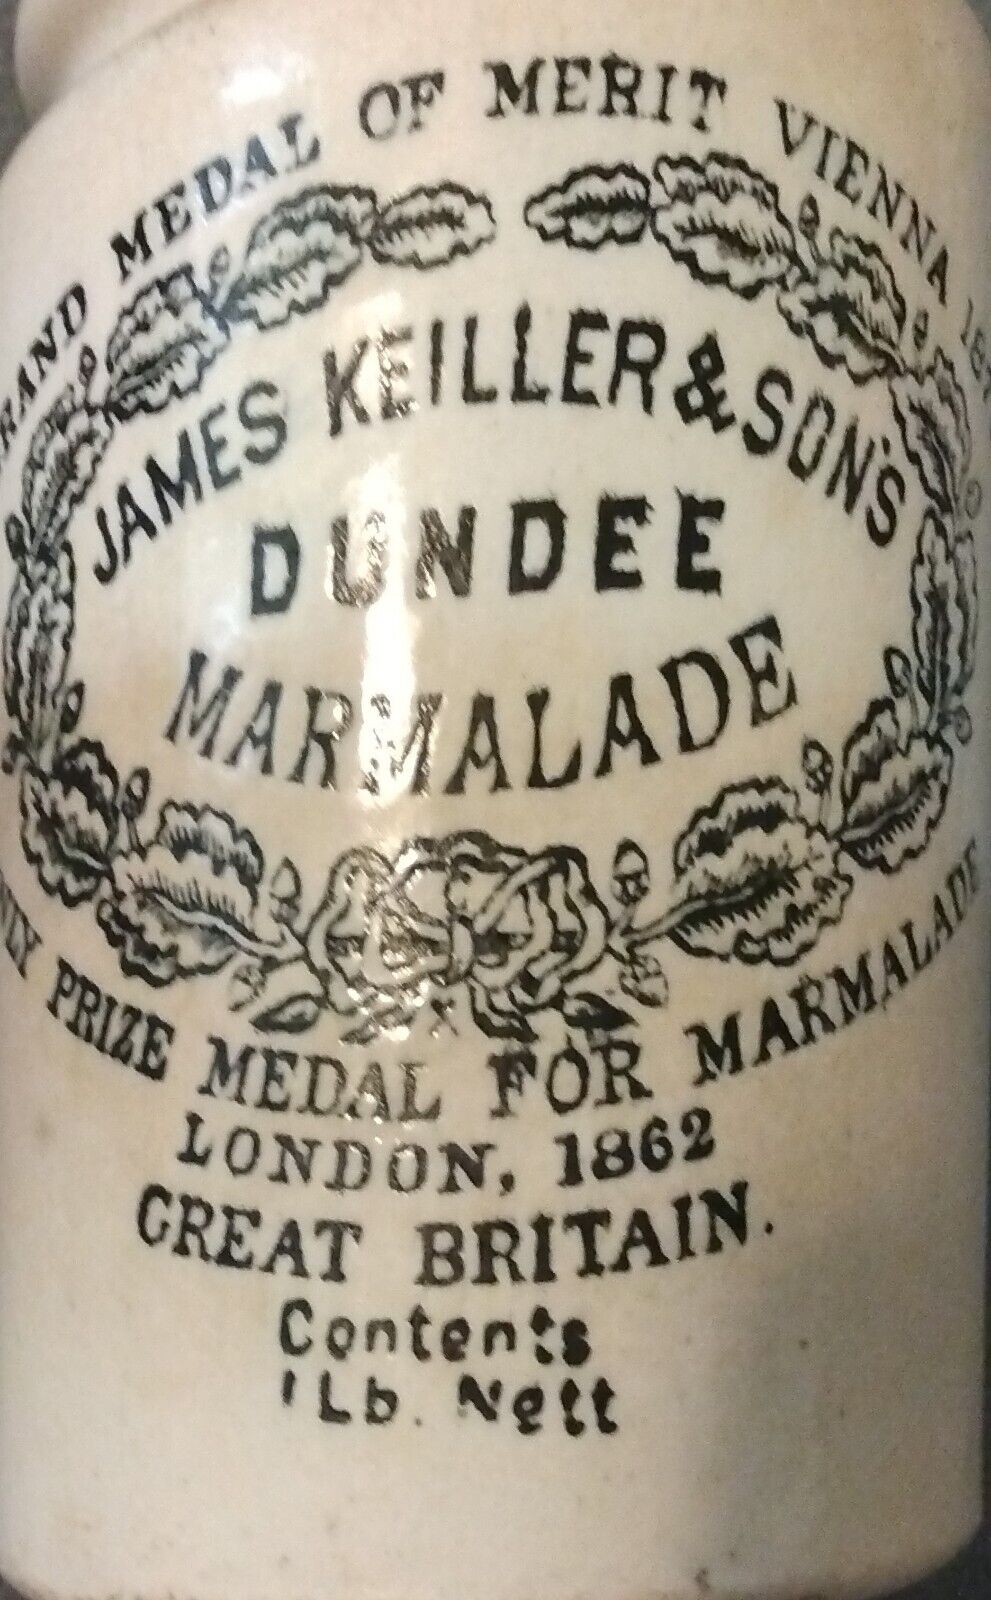 Antique James Keiller & Son Dundee Marmalade Crock Great Britain